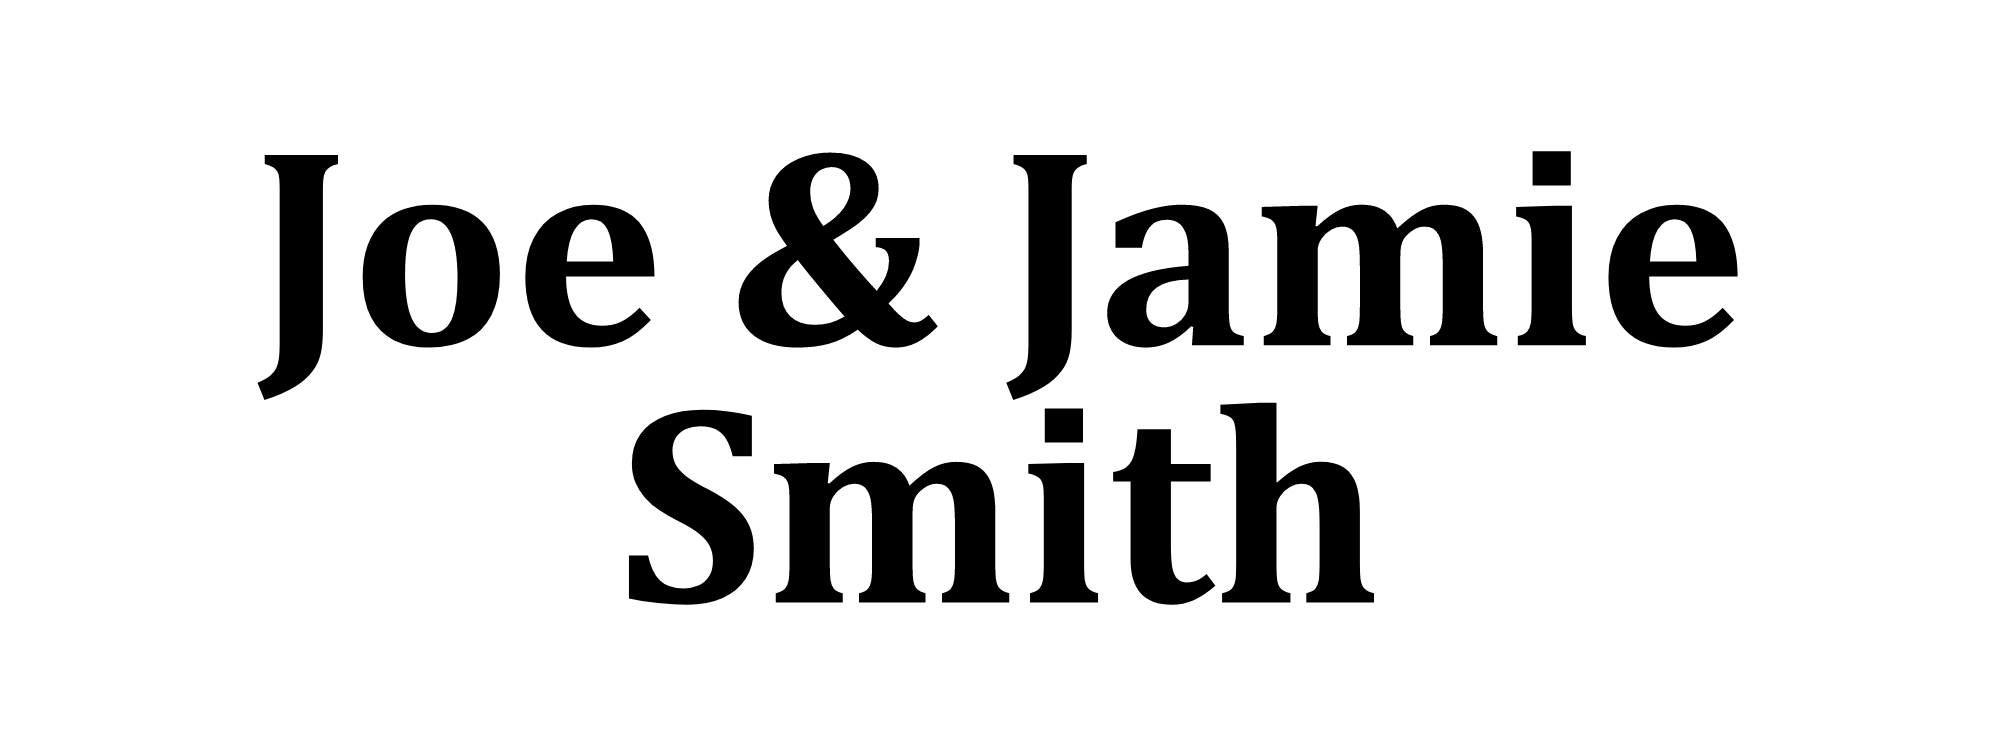 Joe and Jamie Smith logo.png